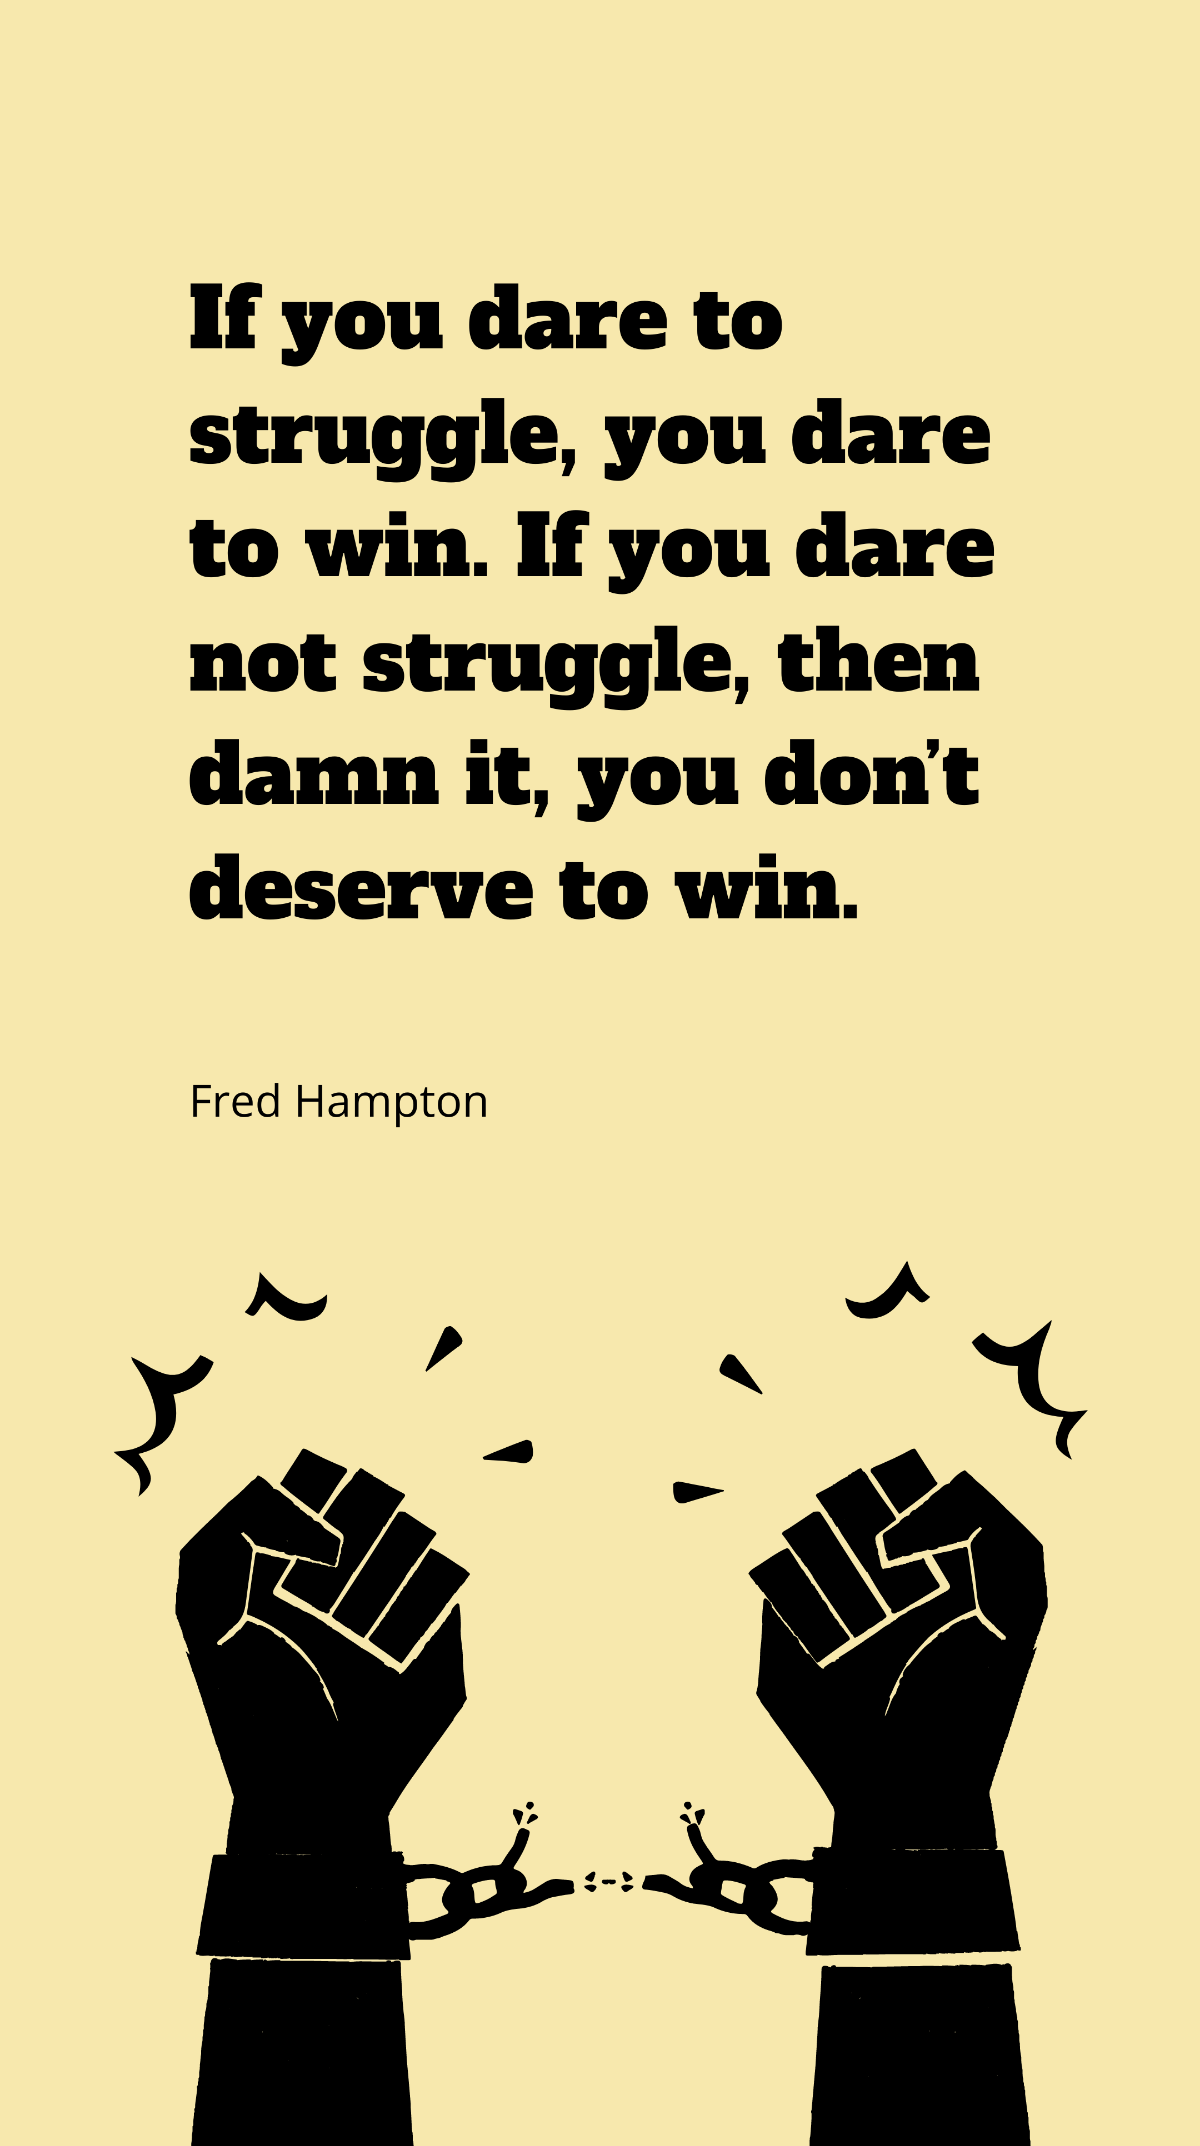 Fred Hampton - If you dare to struggle, you dare to win. If you dare not struggle, then damn it, you don’t deserve to win. Template